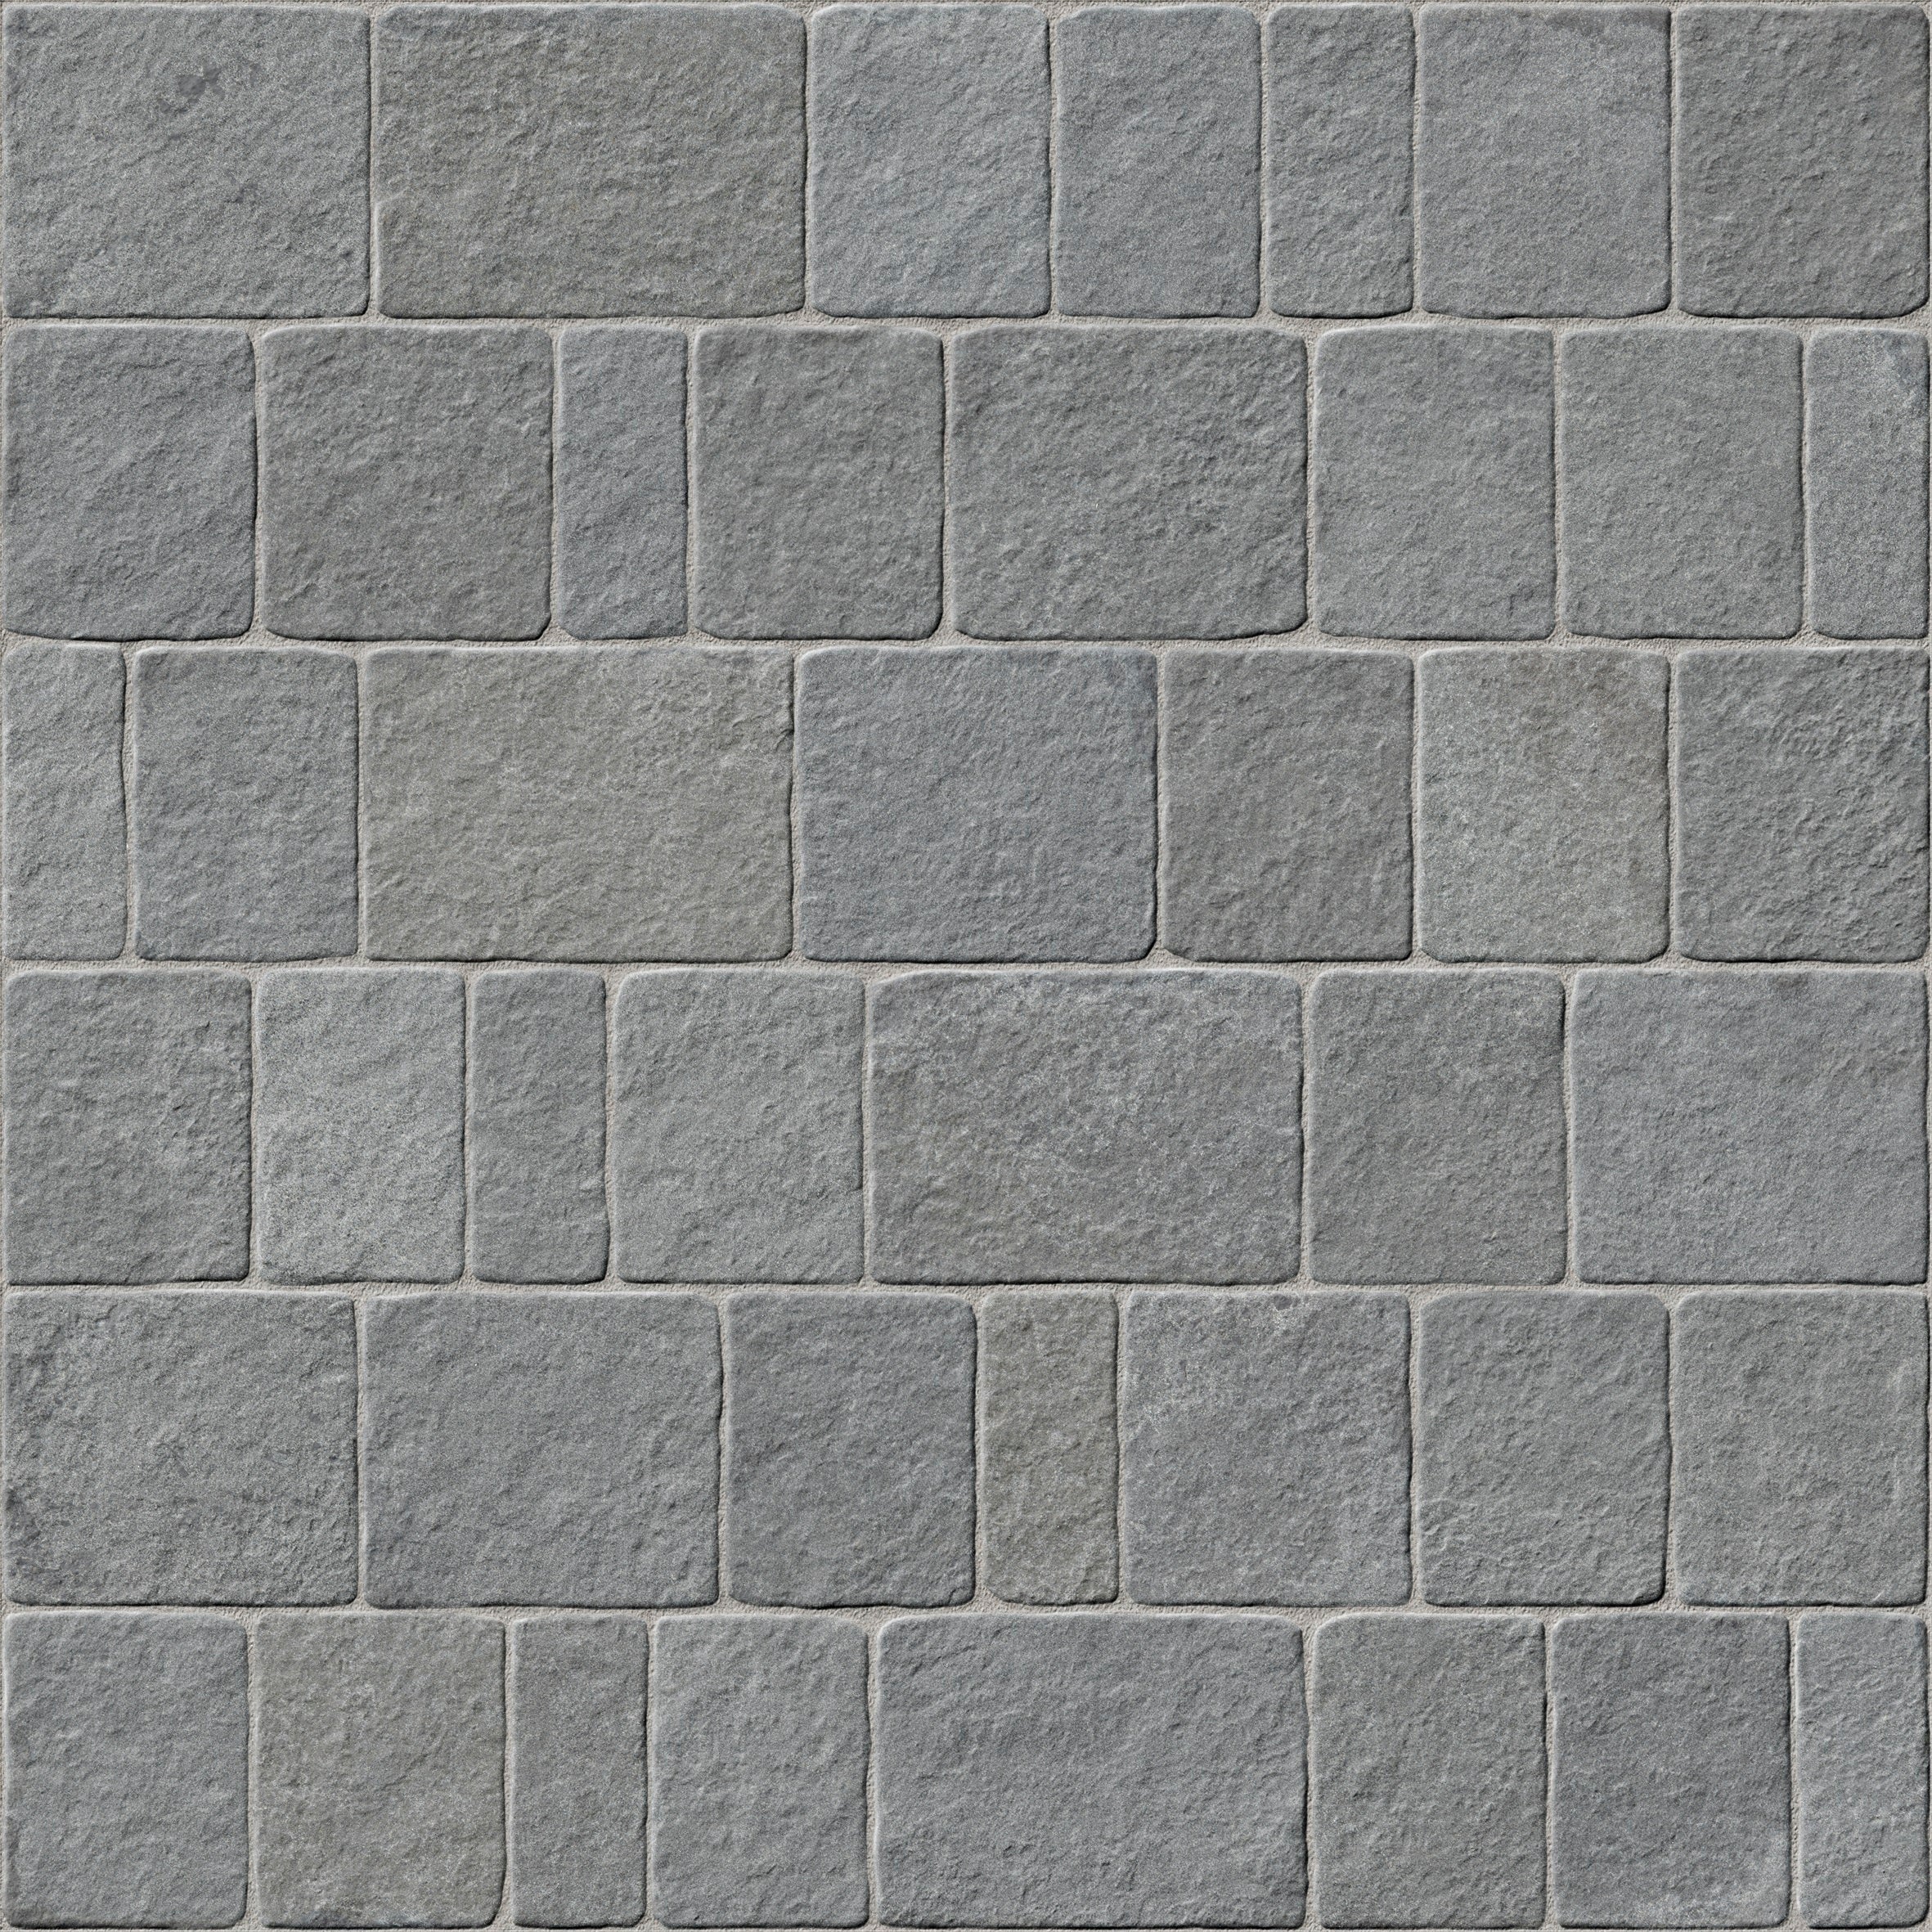 landmark frontier20 bluestone tumbled cobblestone multisize paver tile 24x24x20mm matte rectified porcelain tile distributed by surface group international